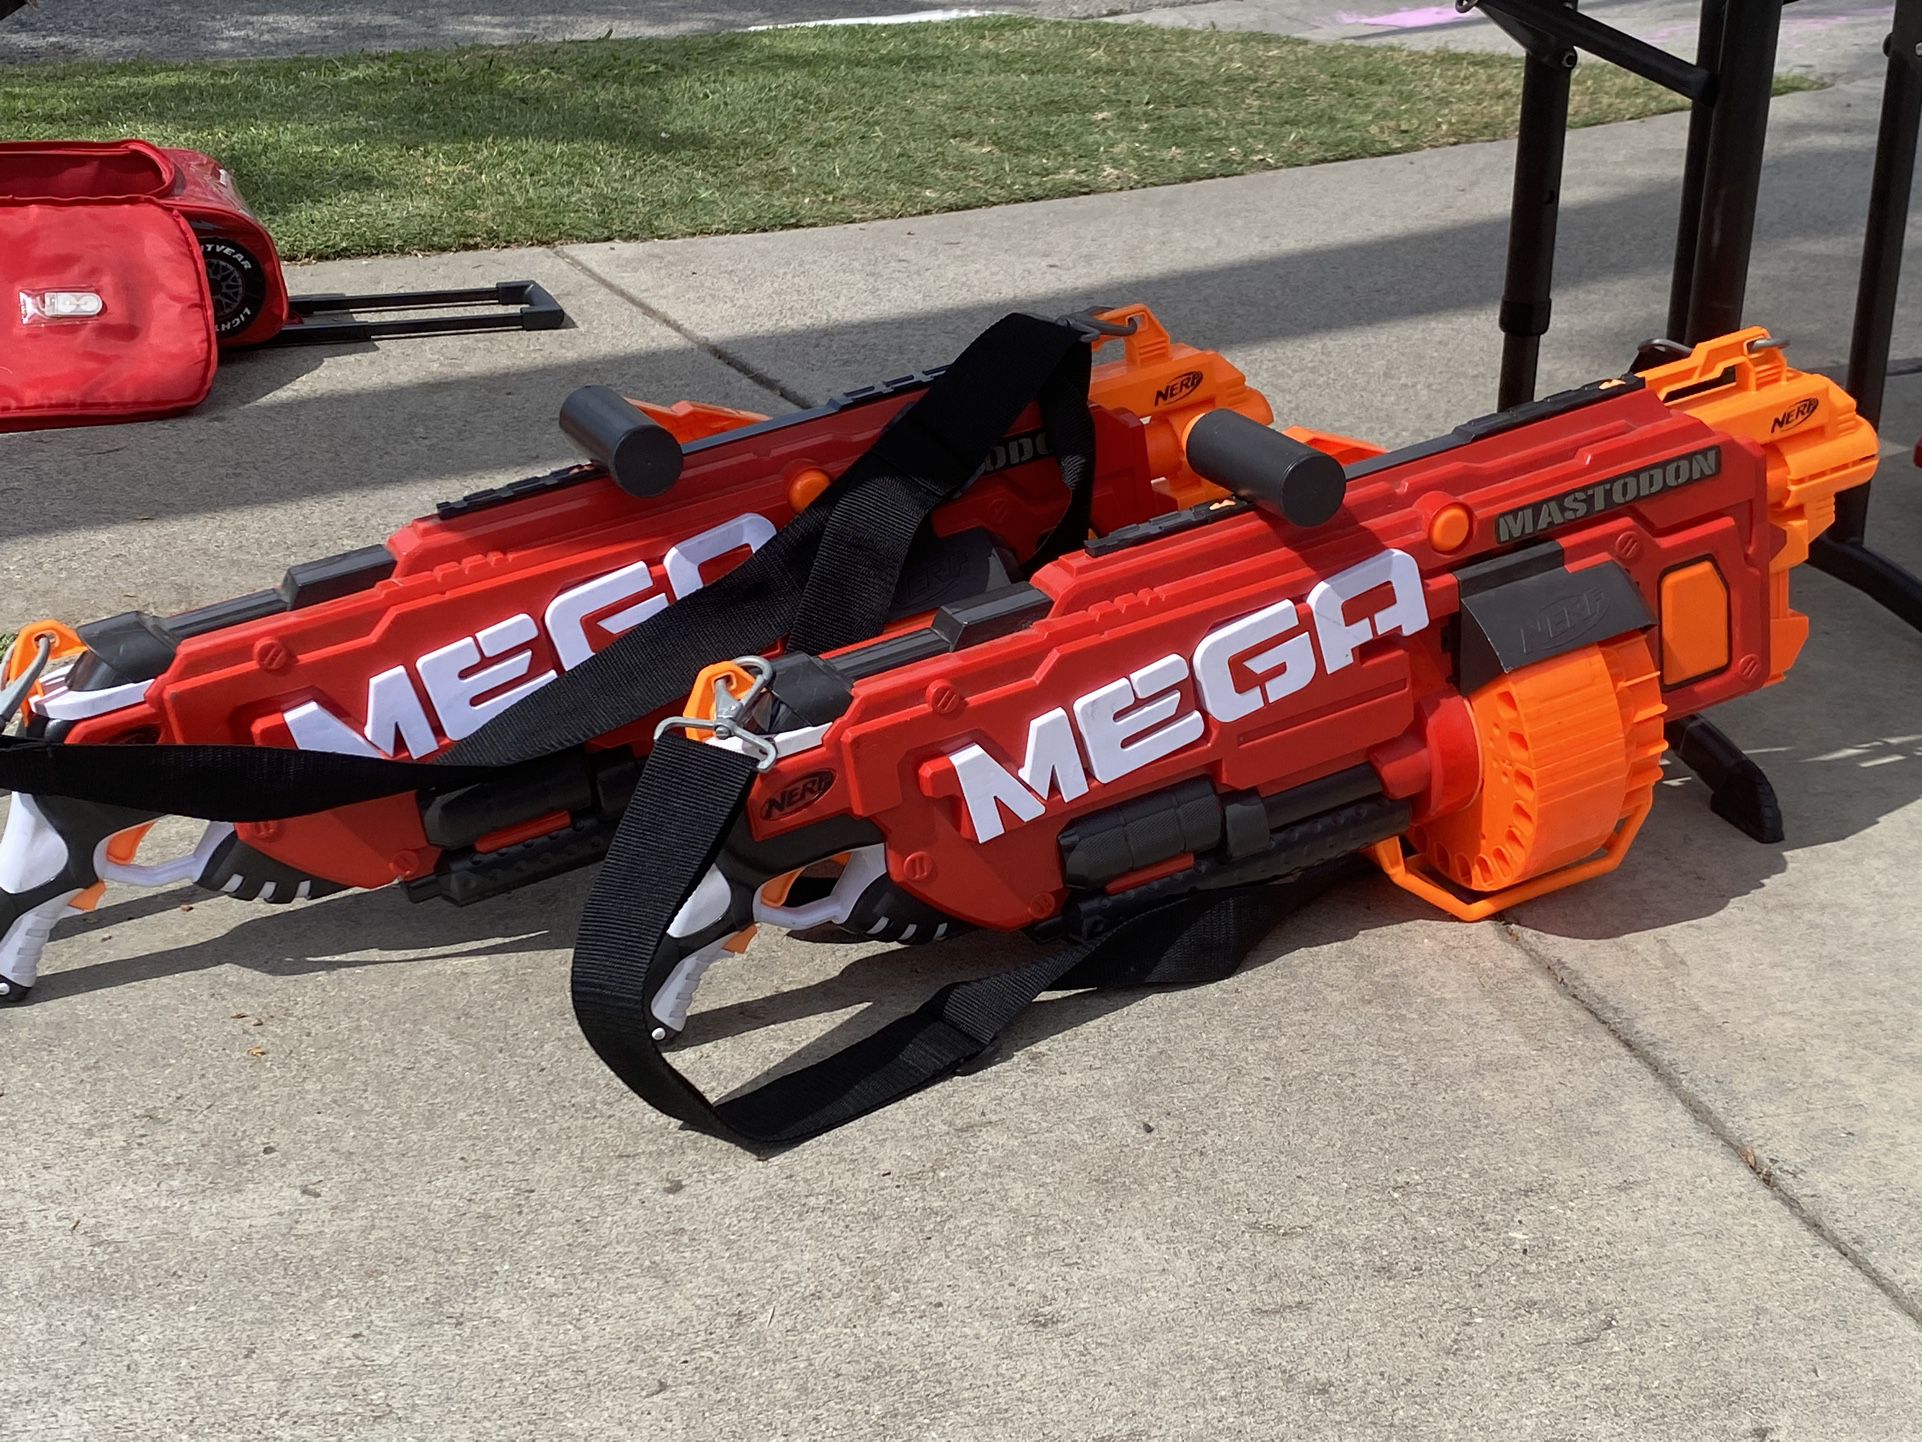 Mega Nerf Gun 